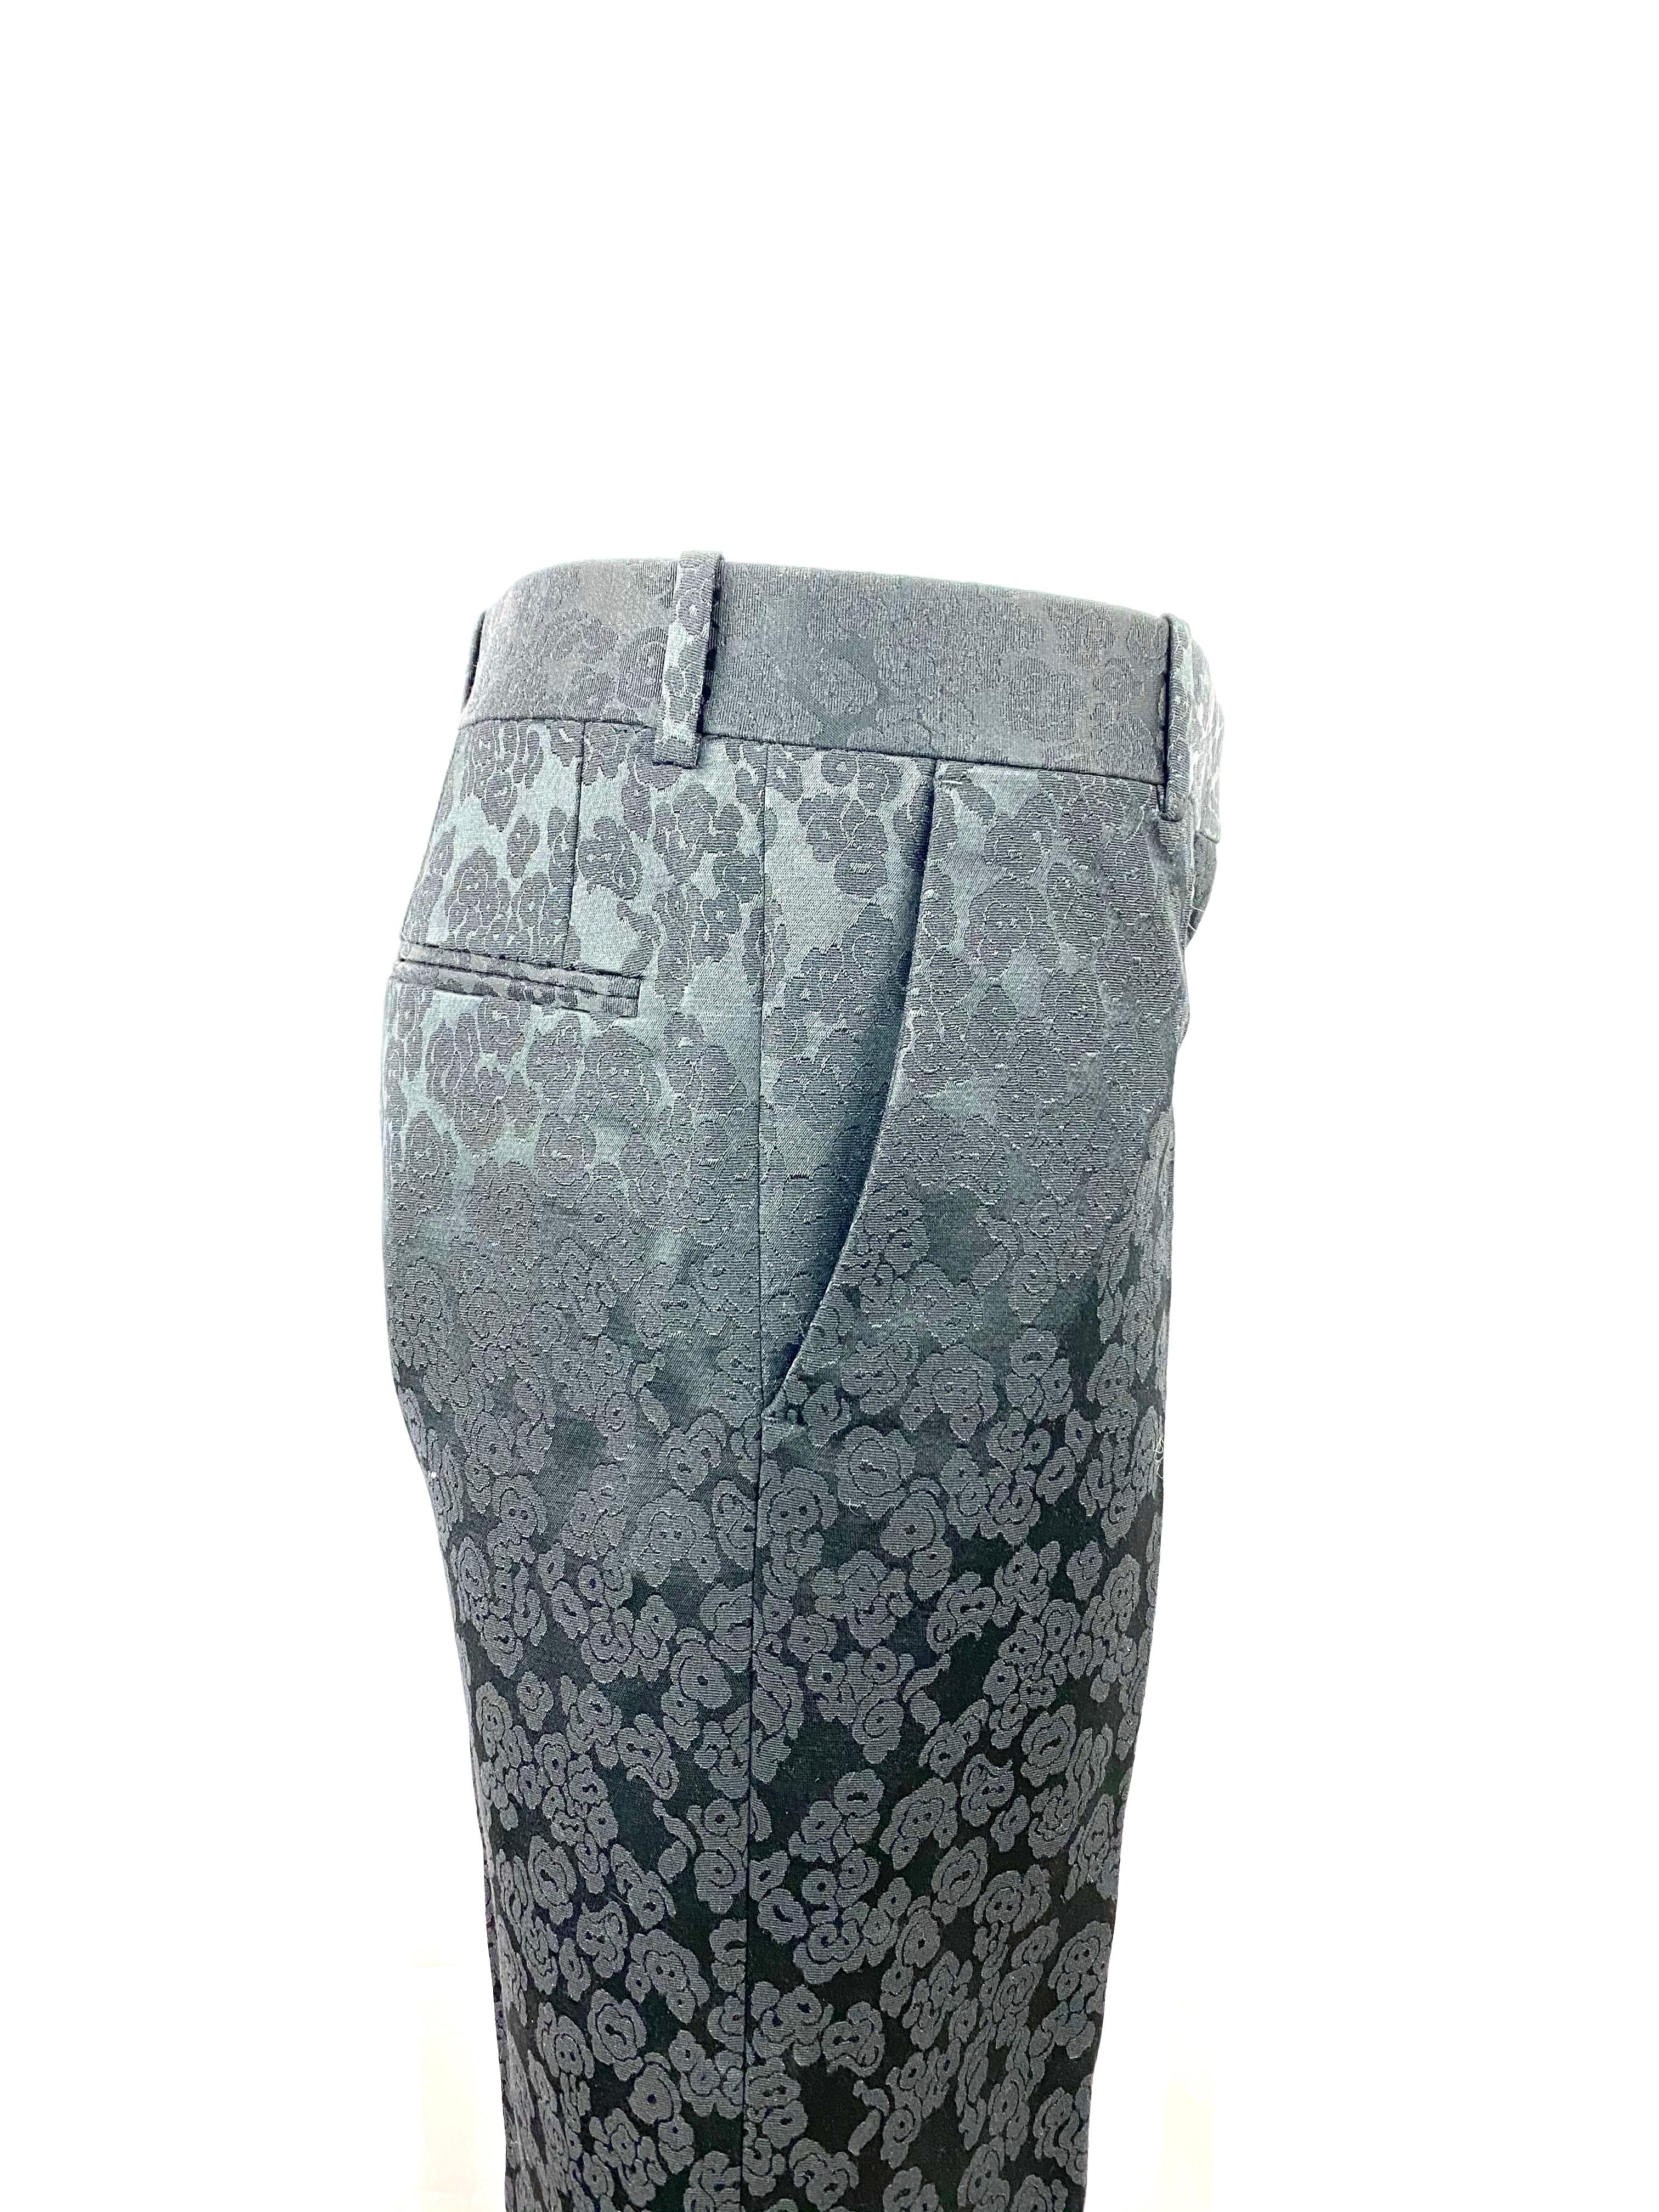 CELINE Black w/ Floral Print Straight Trousers Pants Size 38